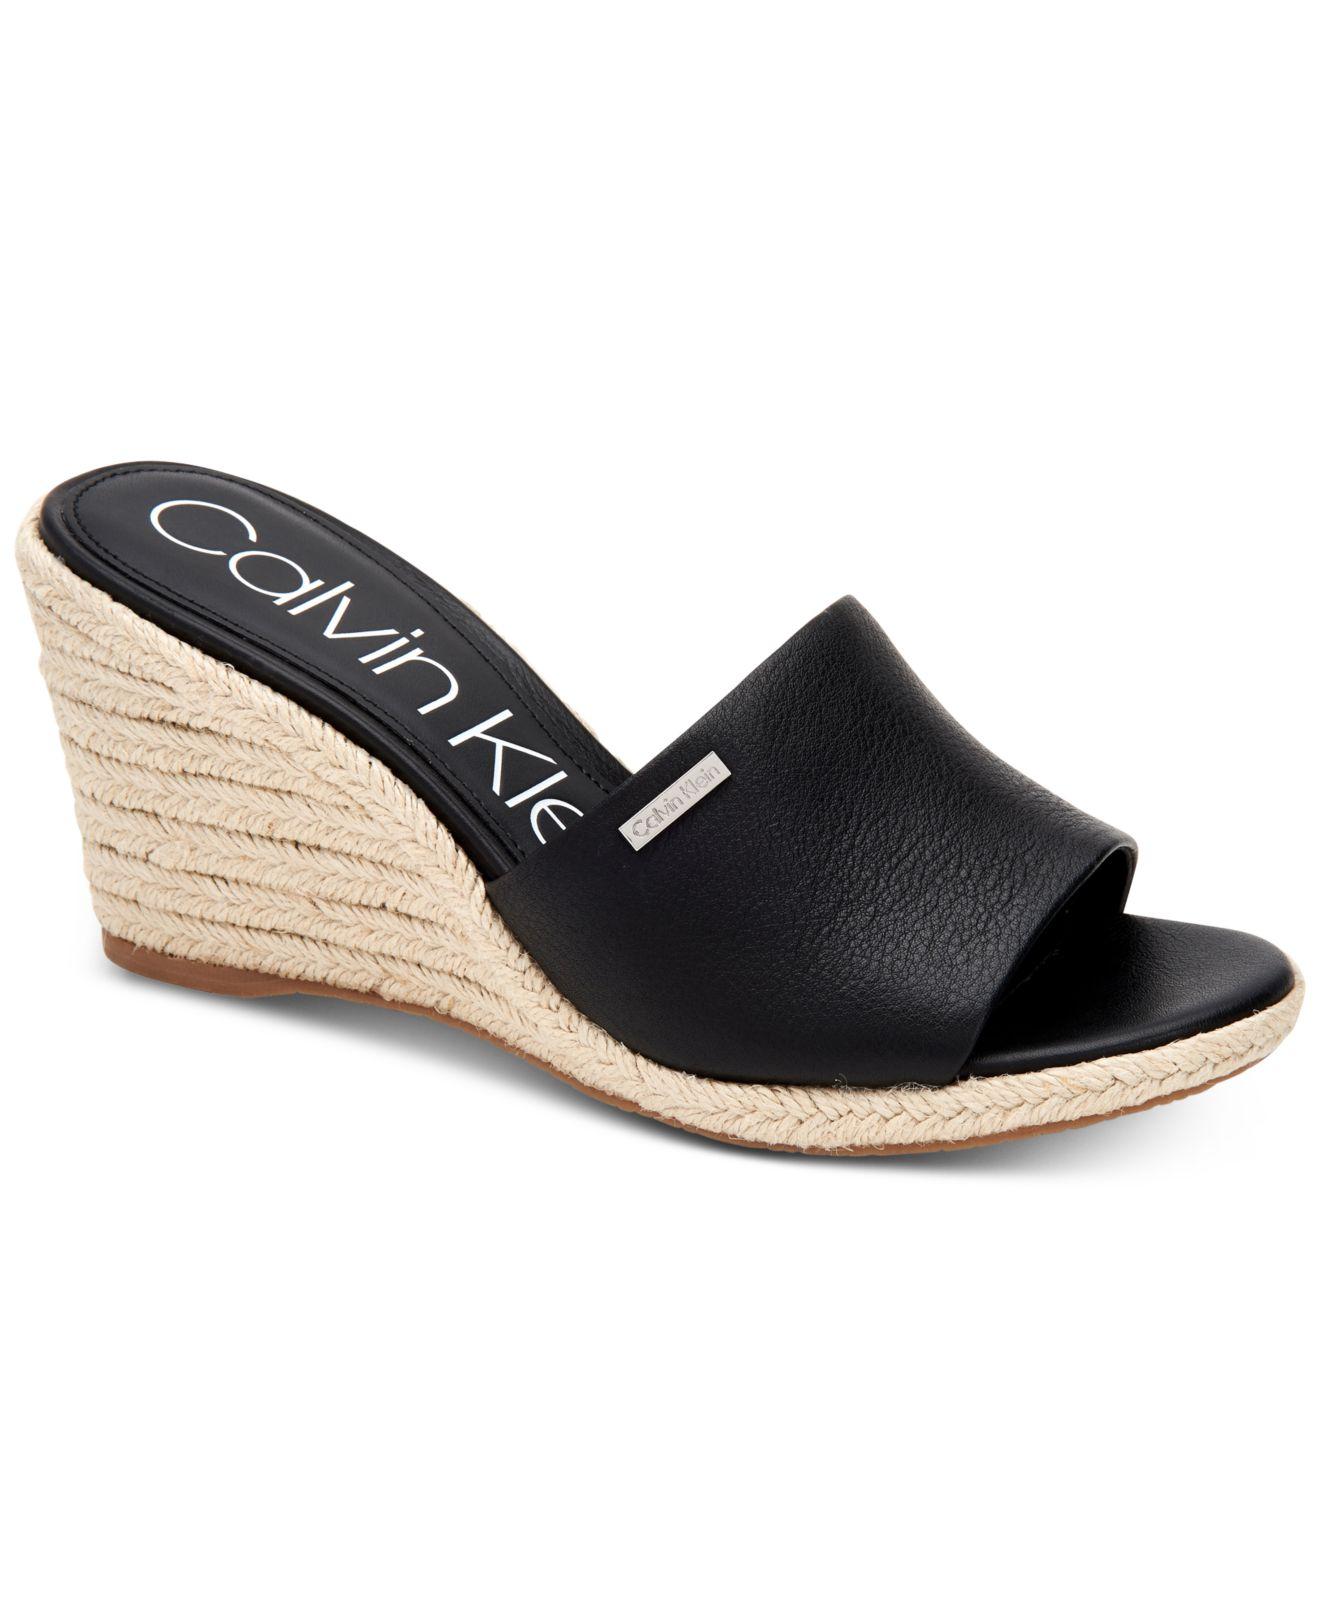 Lyst - Calvin Klein Britta Wedge Sandals, Created For Macy's in Black